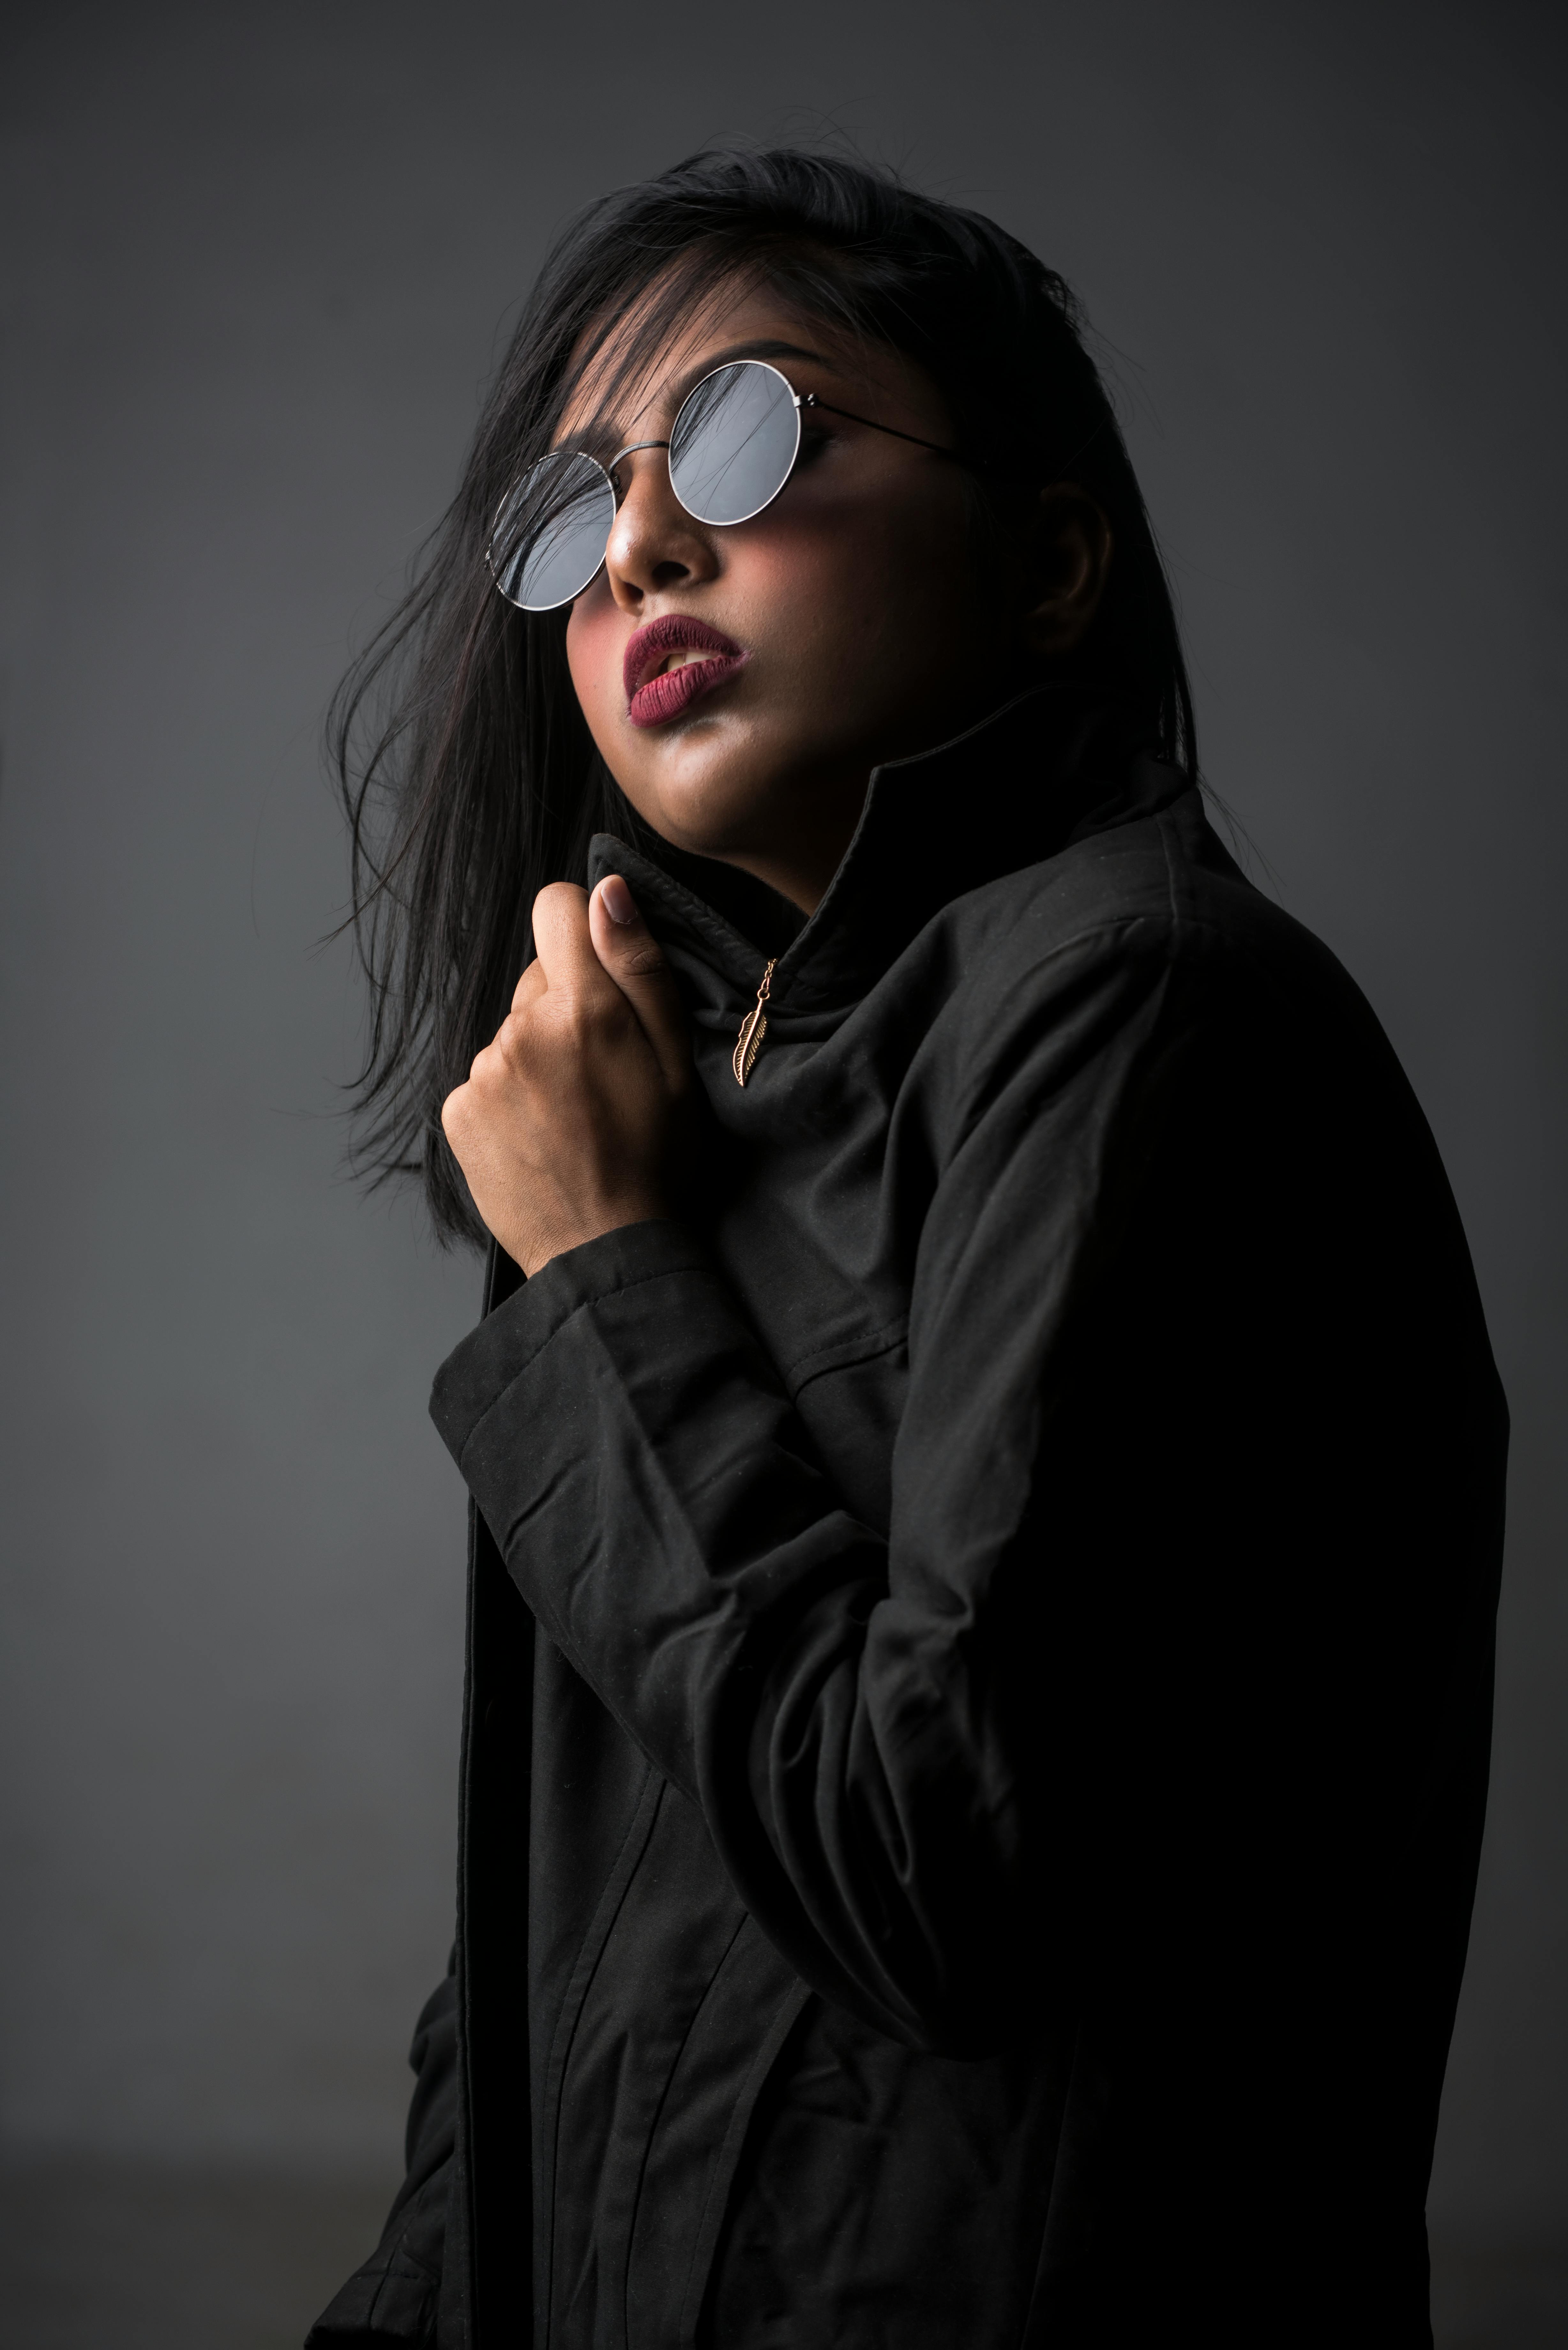 Pin by Maisha Tasnim on Saree ideas | Saree poses, Saree photoshoot, Girl  photography poses